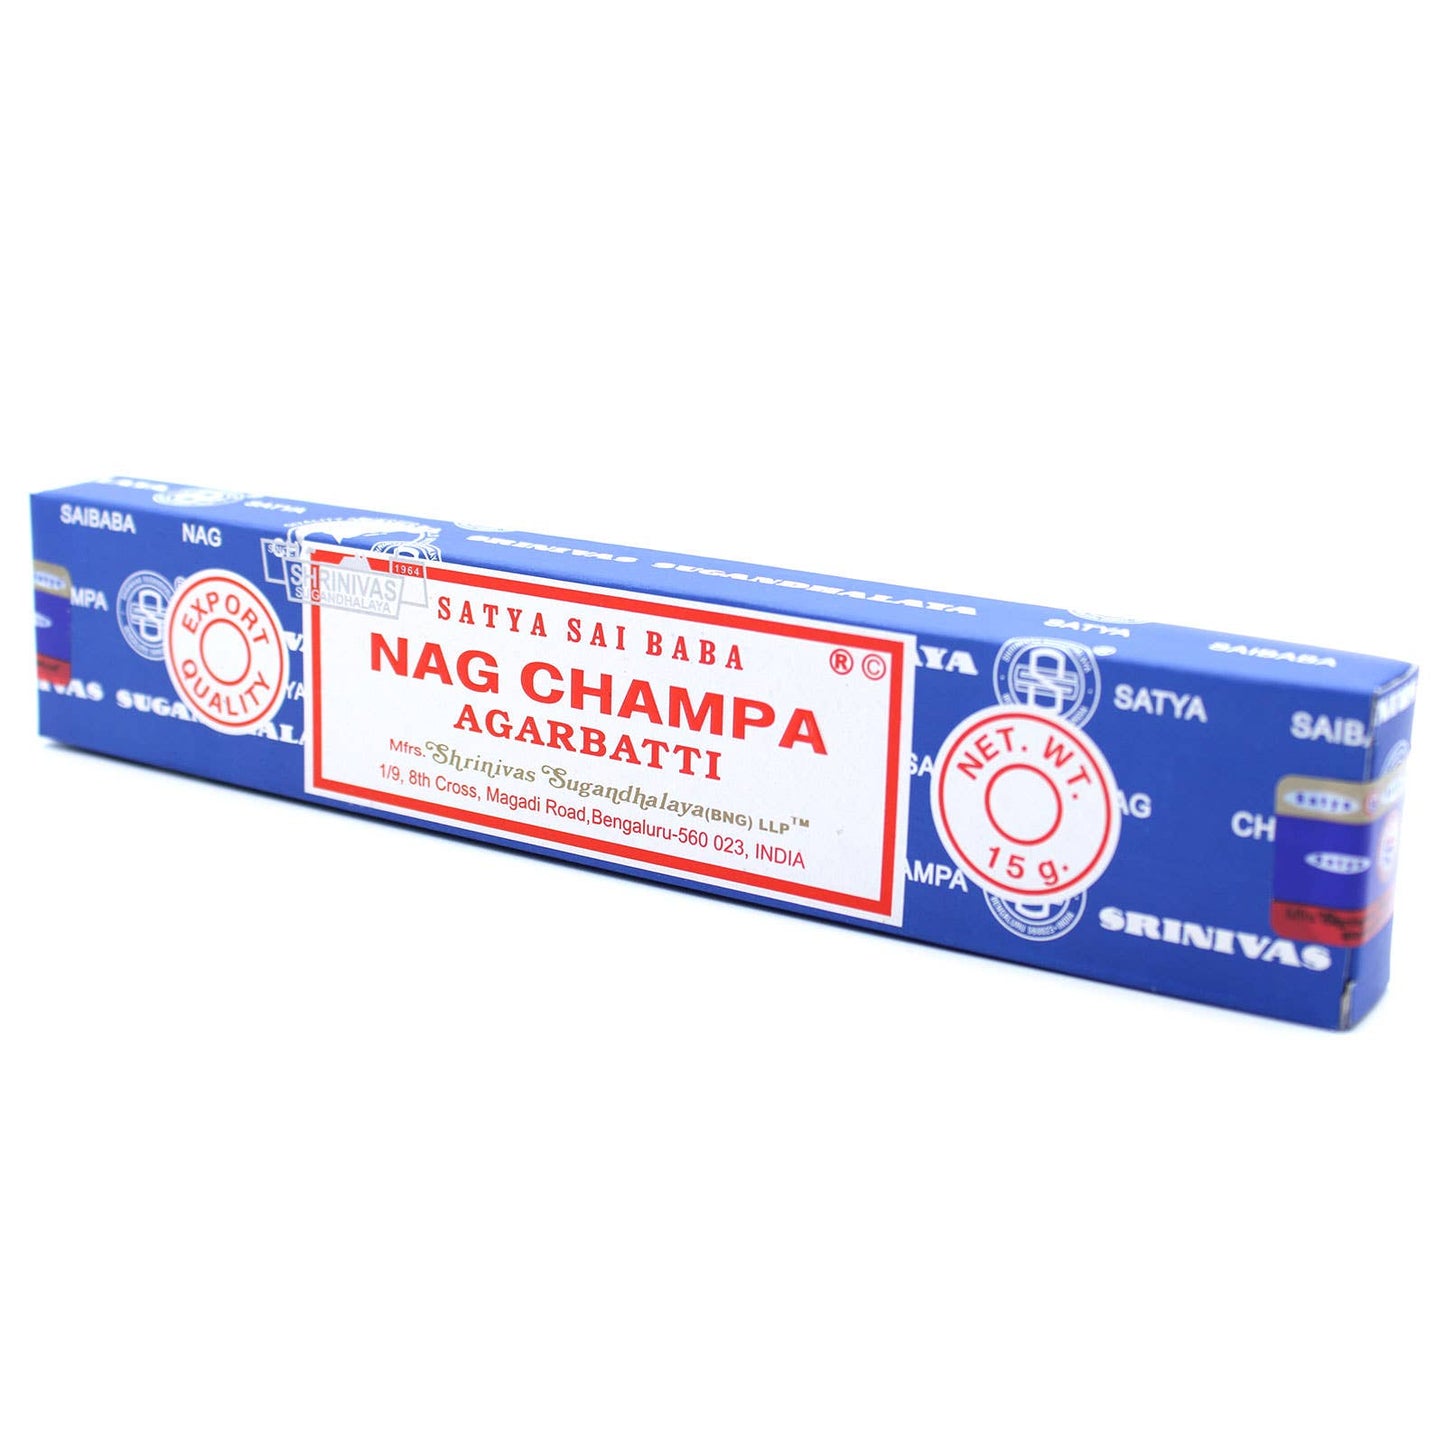 Nag Champa Incense – Rebecca Graves Pottery